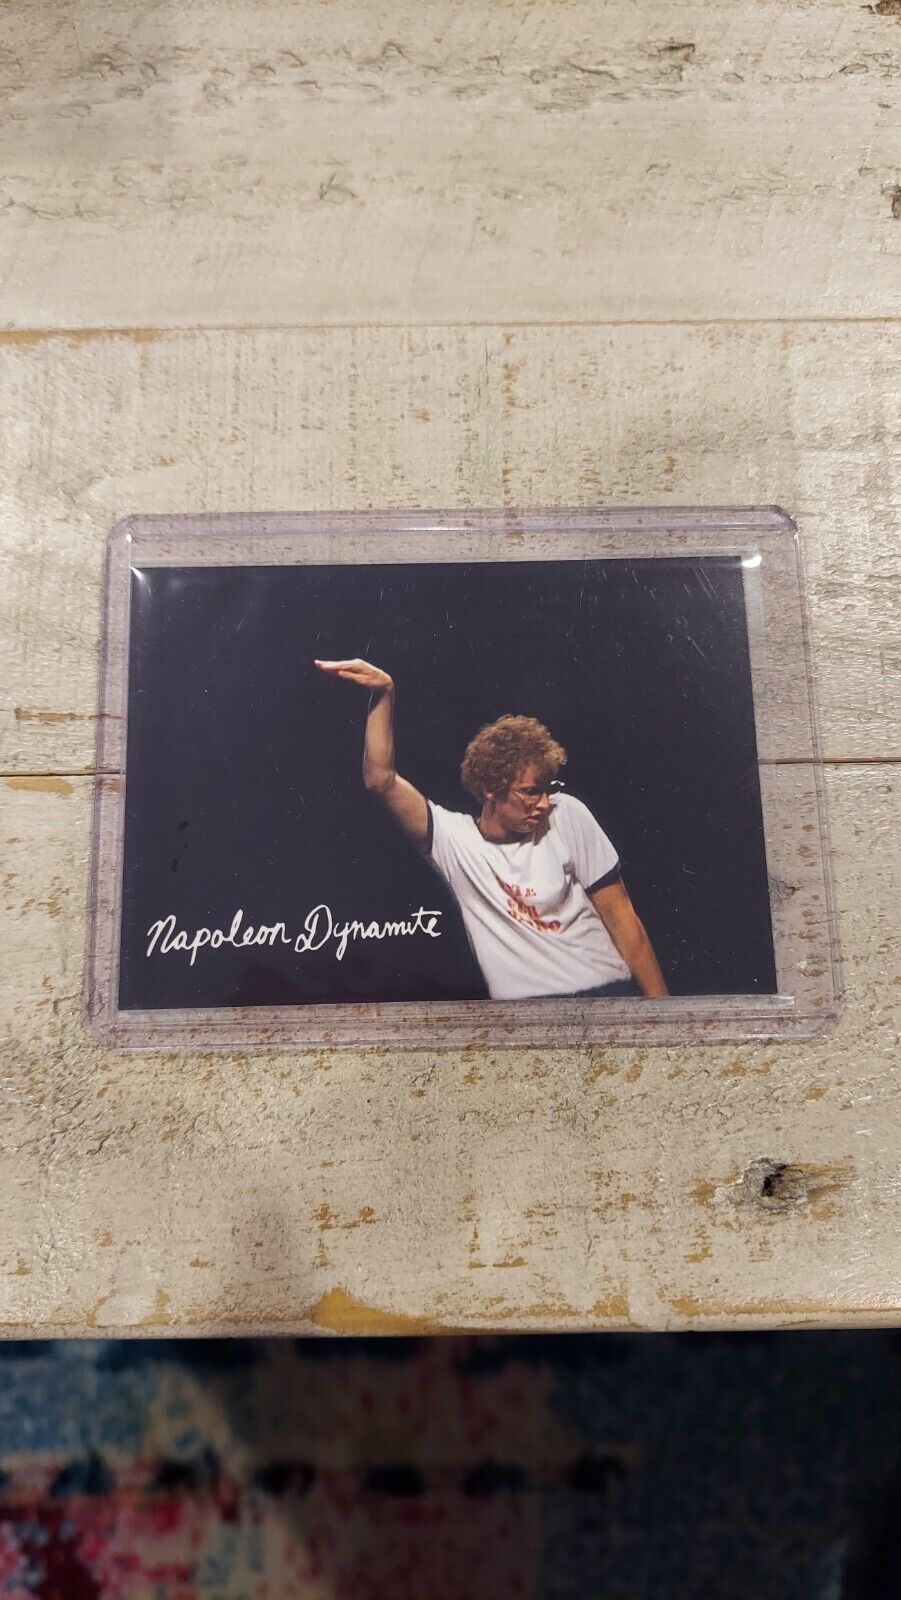 2005 Napoleon Dynamite Sweet Moves. Flippin’ Sweet Trading Card.